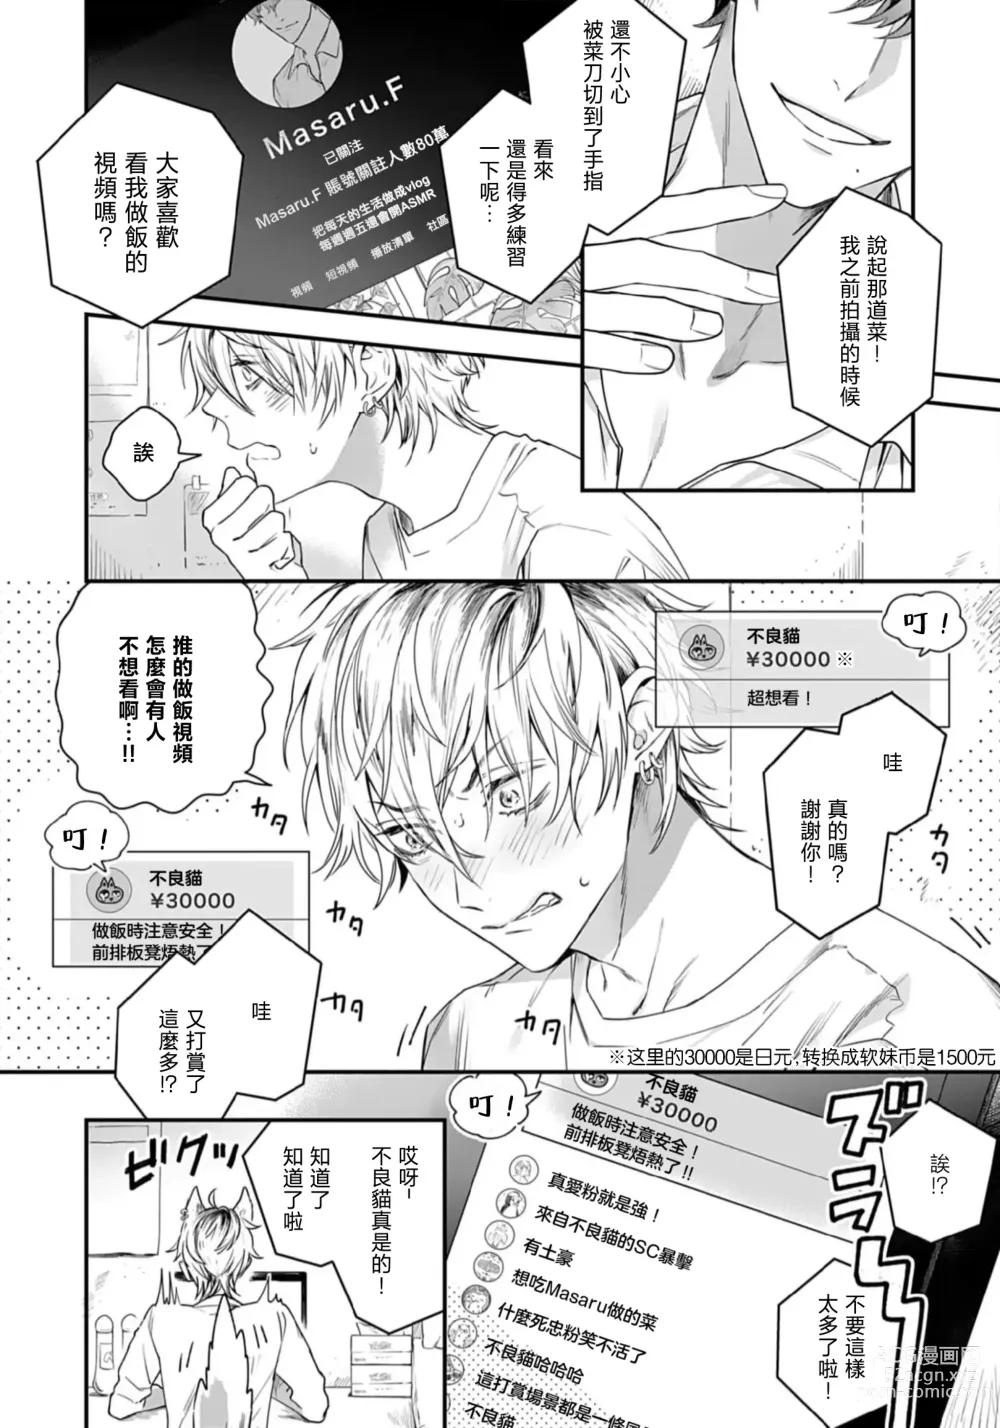 Page 4 of manga 他的声音在我听来完全就是爱之歌 1-3